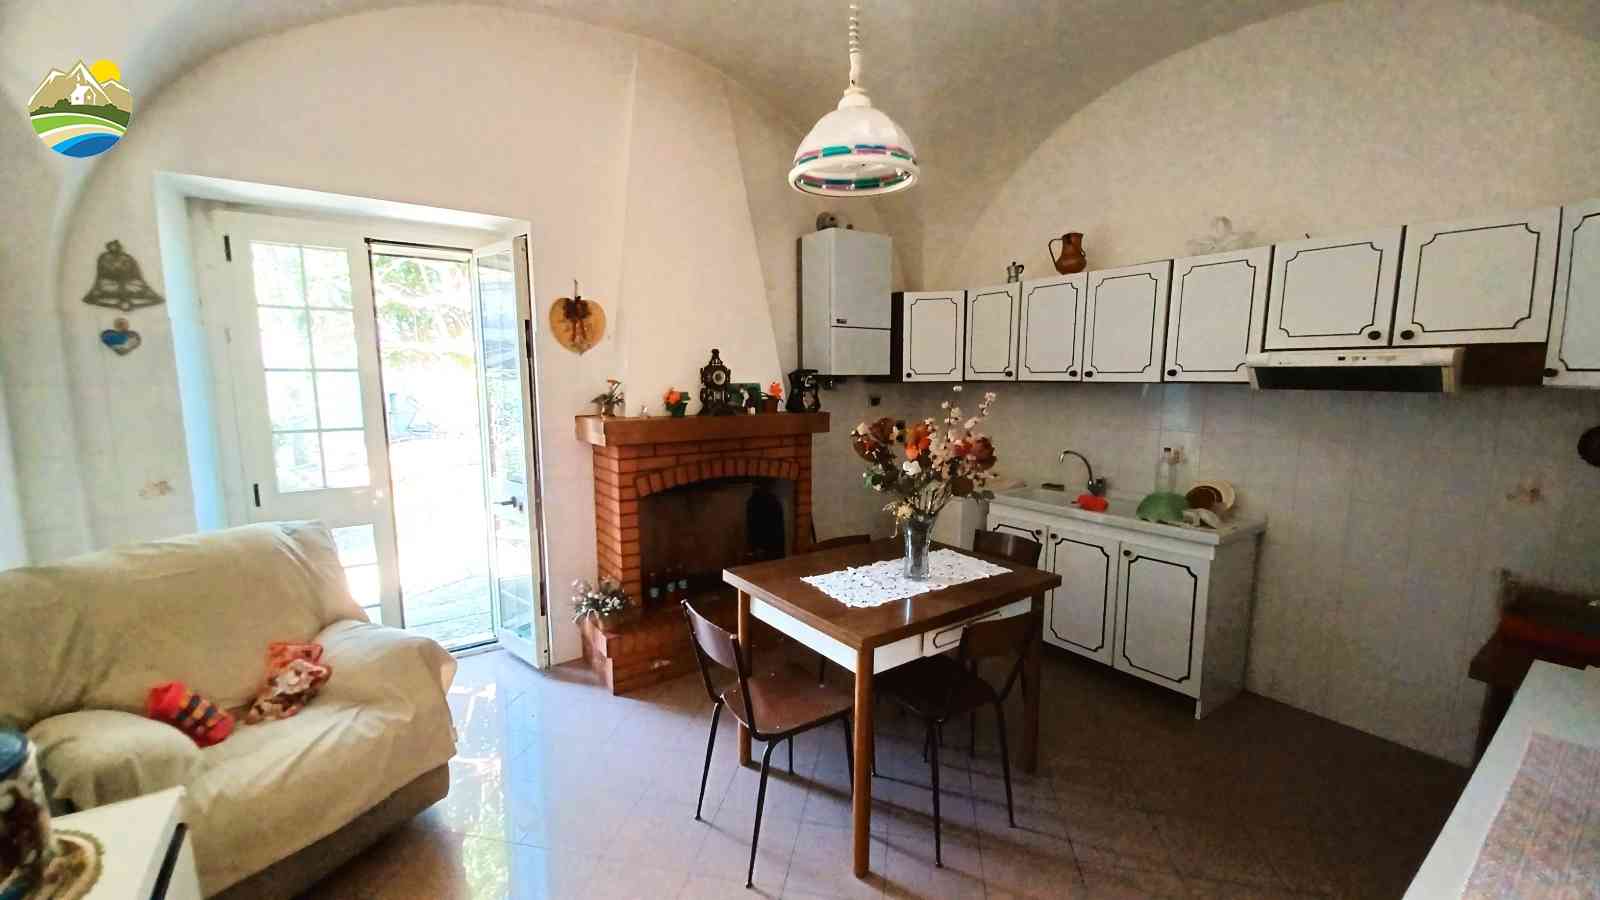 Casa in paese Casa in paese in vendita Picciano (PE), Casa Rondine - Picciano - EUR 88.812 640